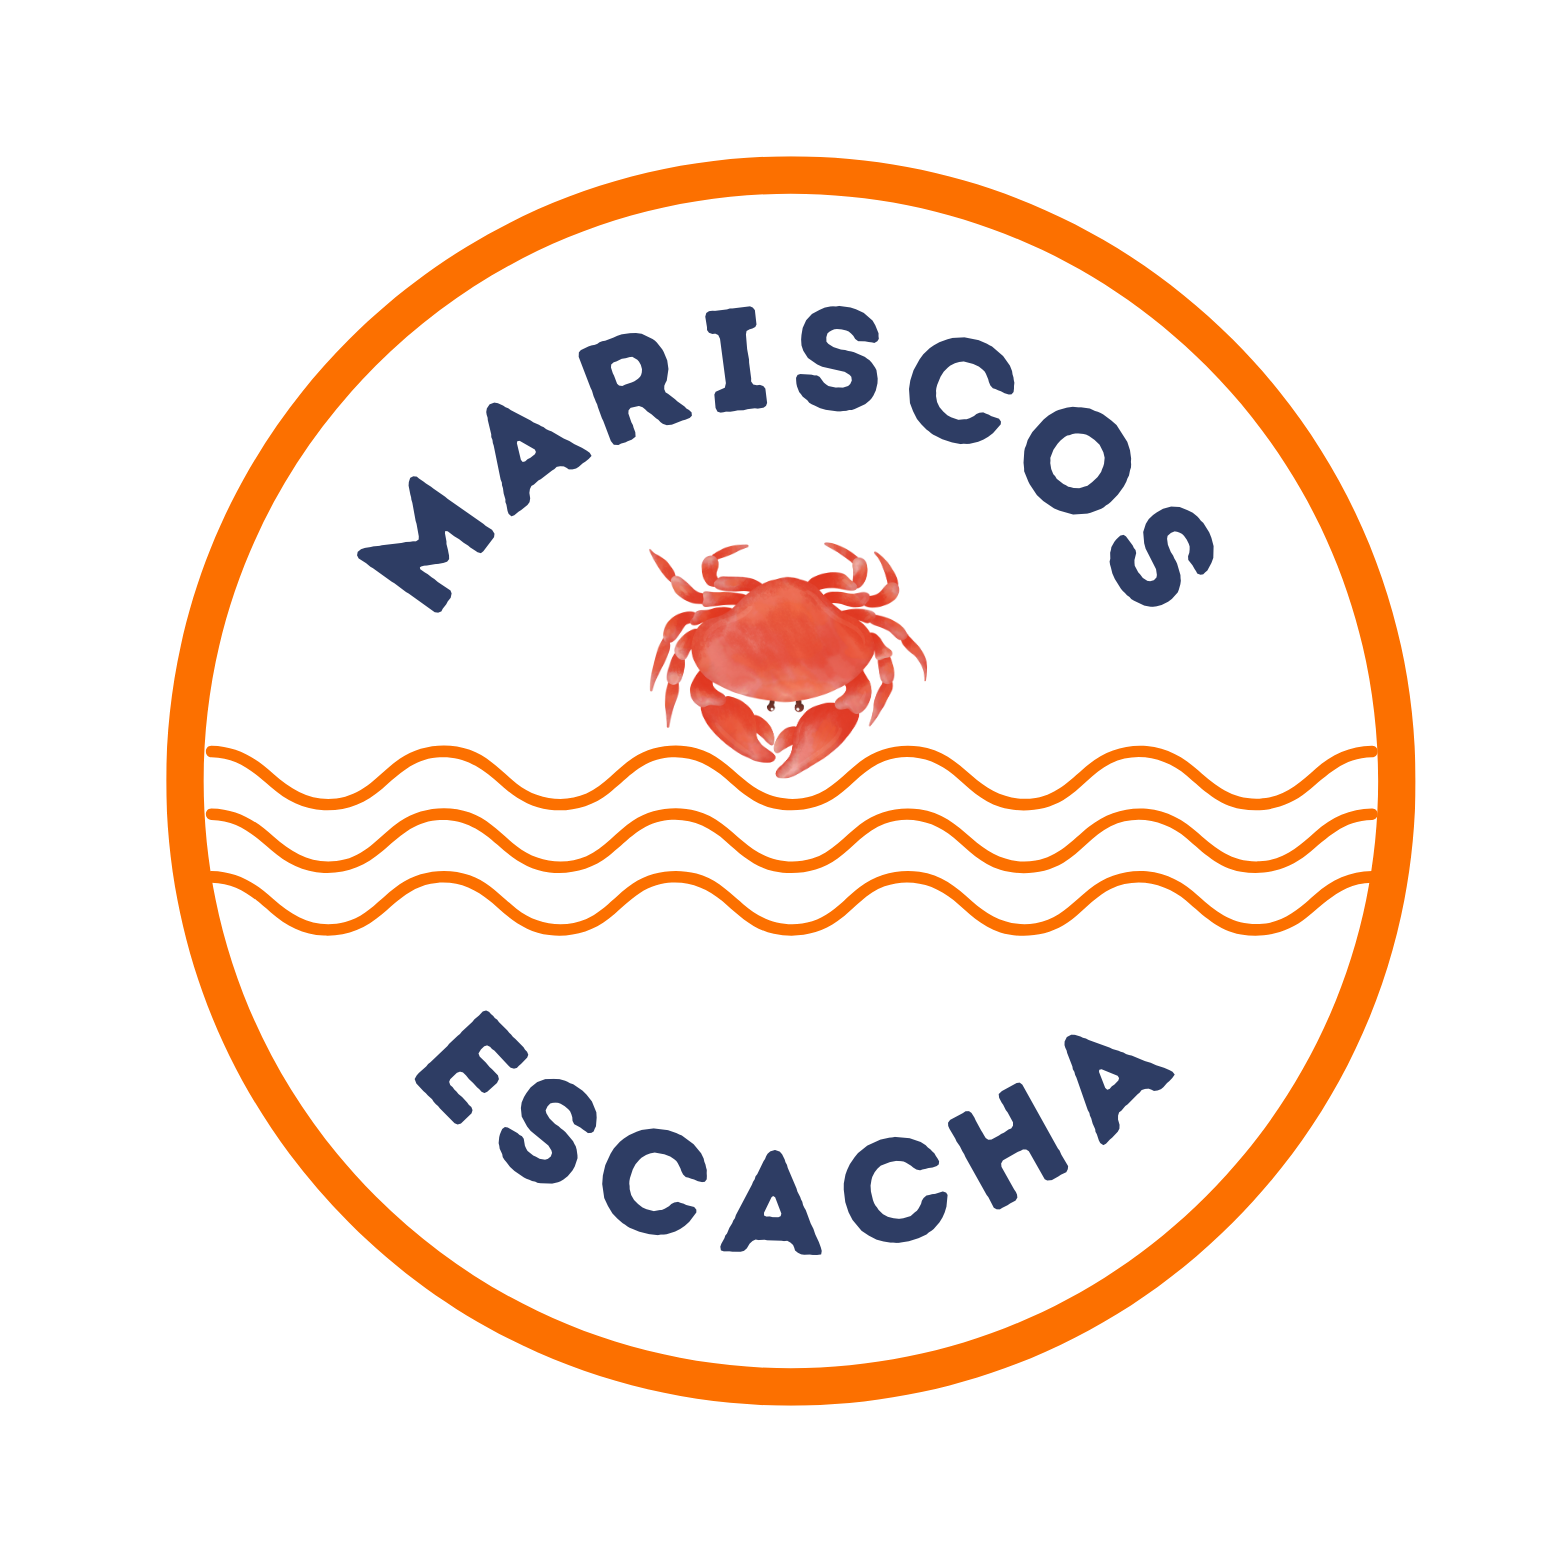 www.mariscosescacha.com